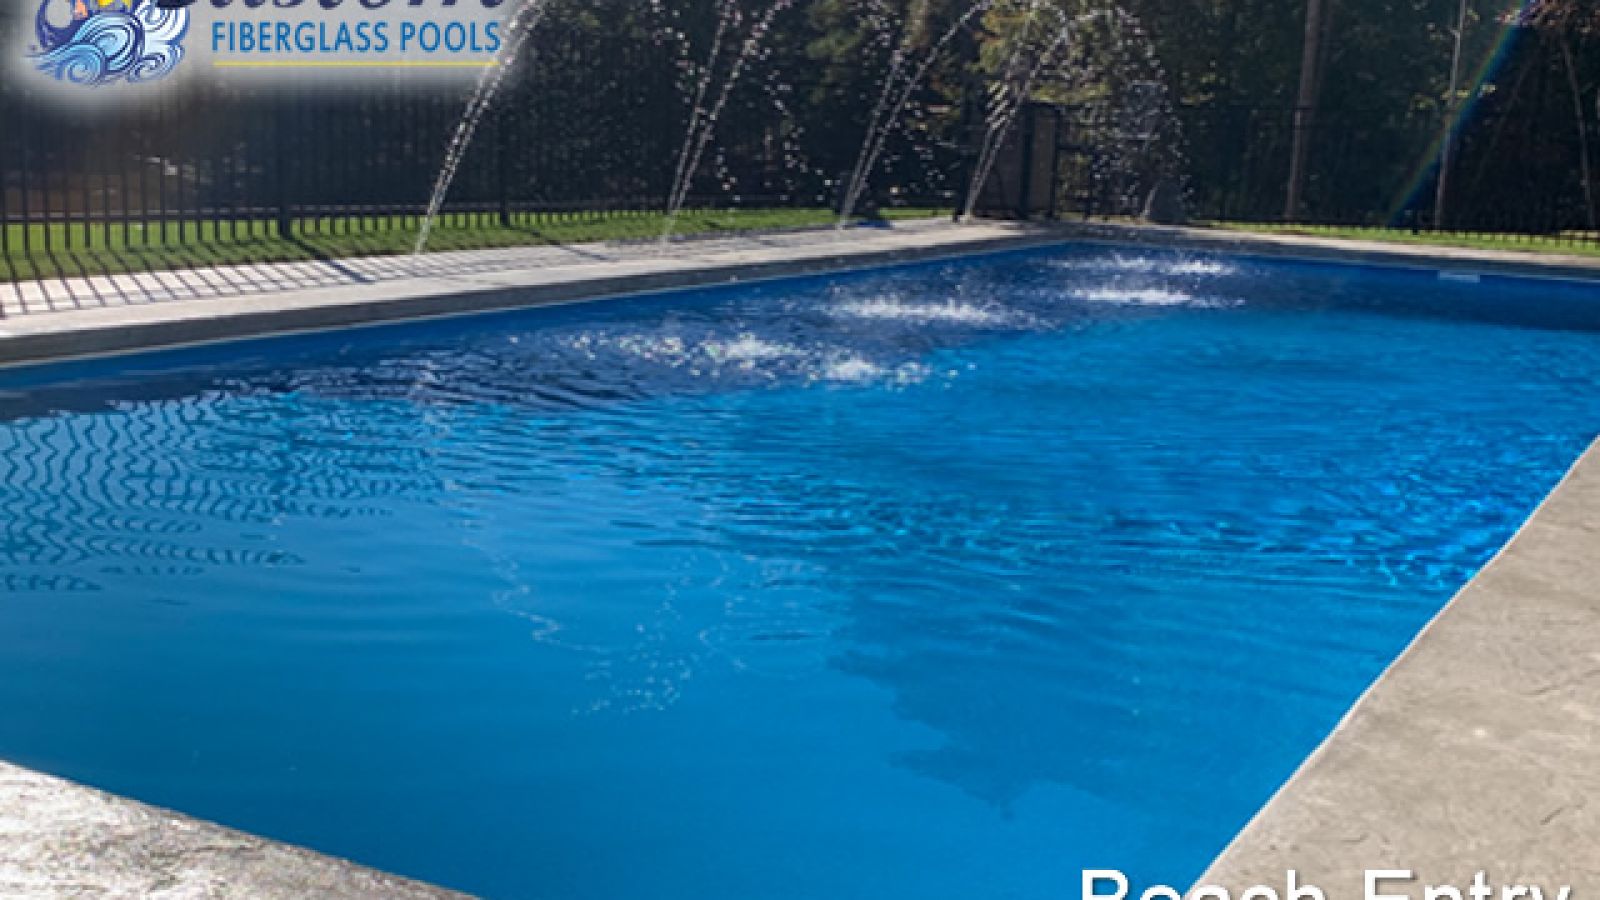 16' x 40' Beach Entry Fiberglass Pool offering a luxurious backyard resort experience in Clarksville, TN